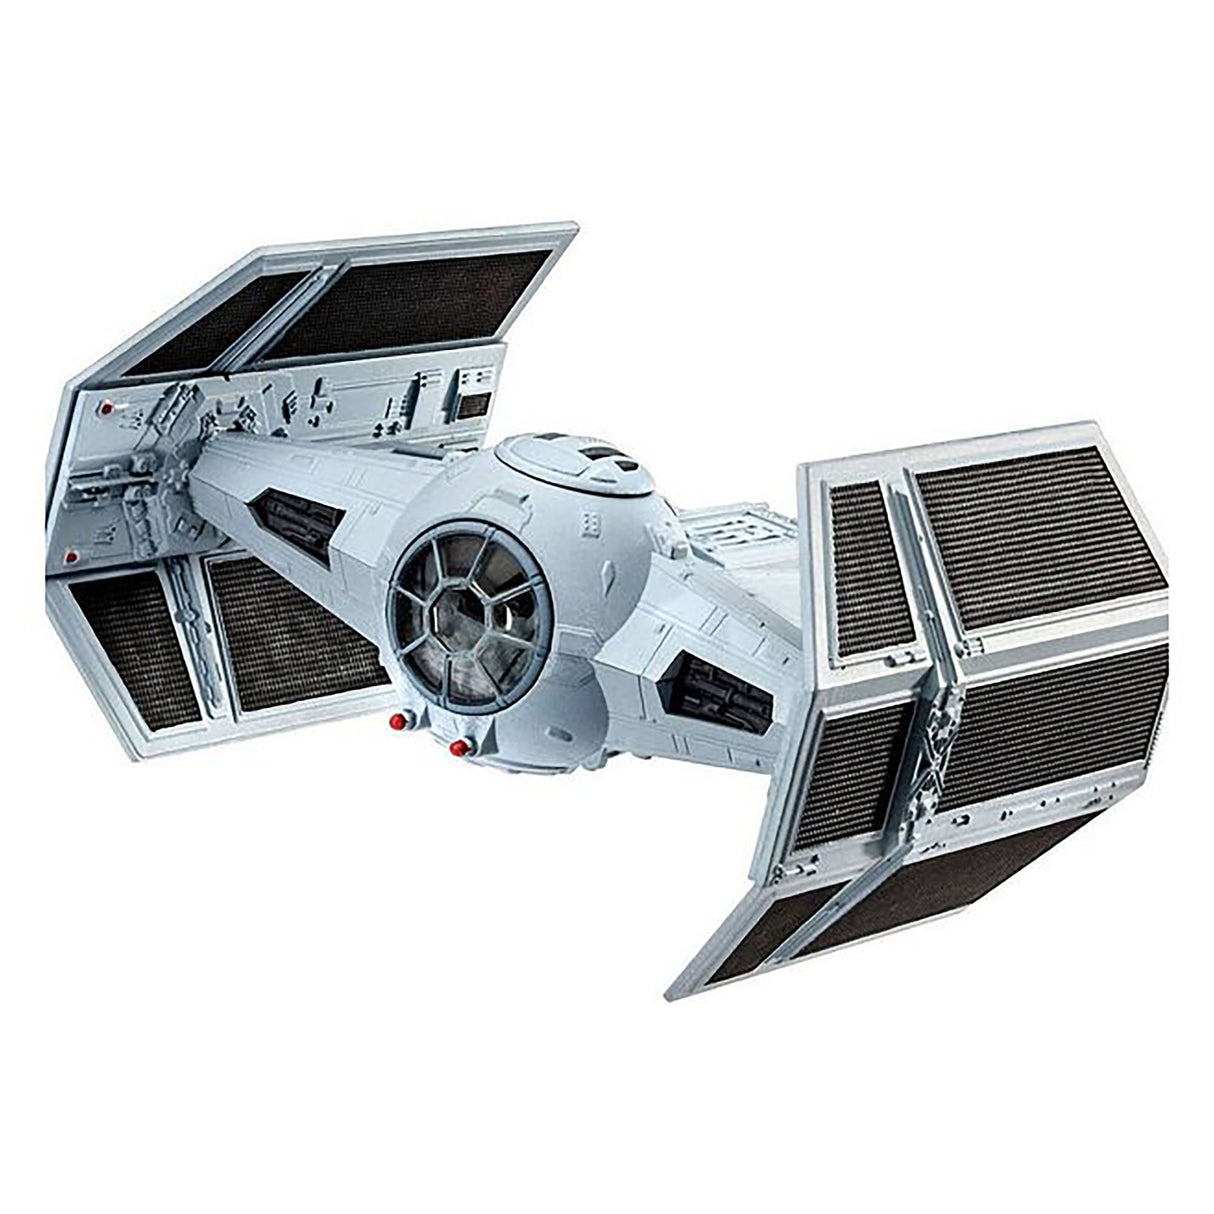 Star Wars Darth Vader's Tie Fighter 1:121 Replica Model Kit